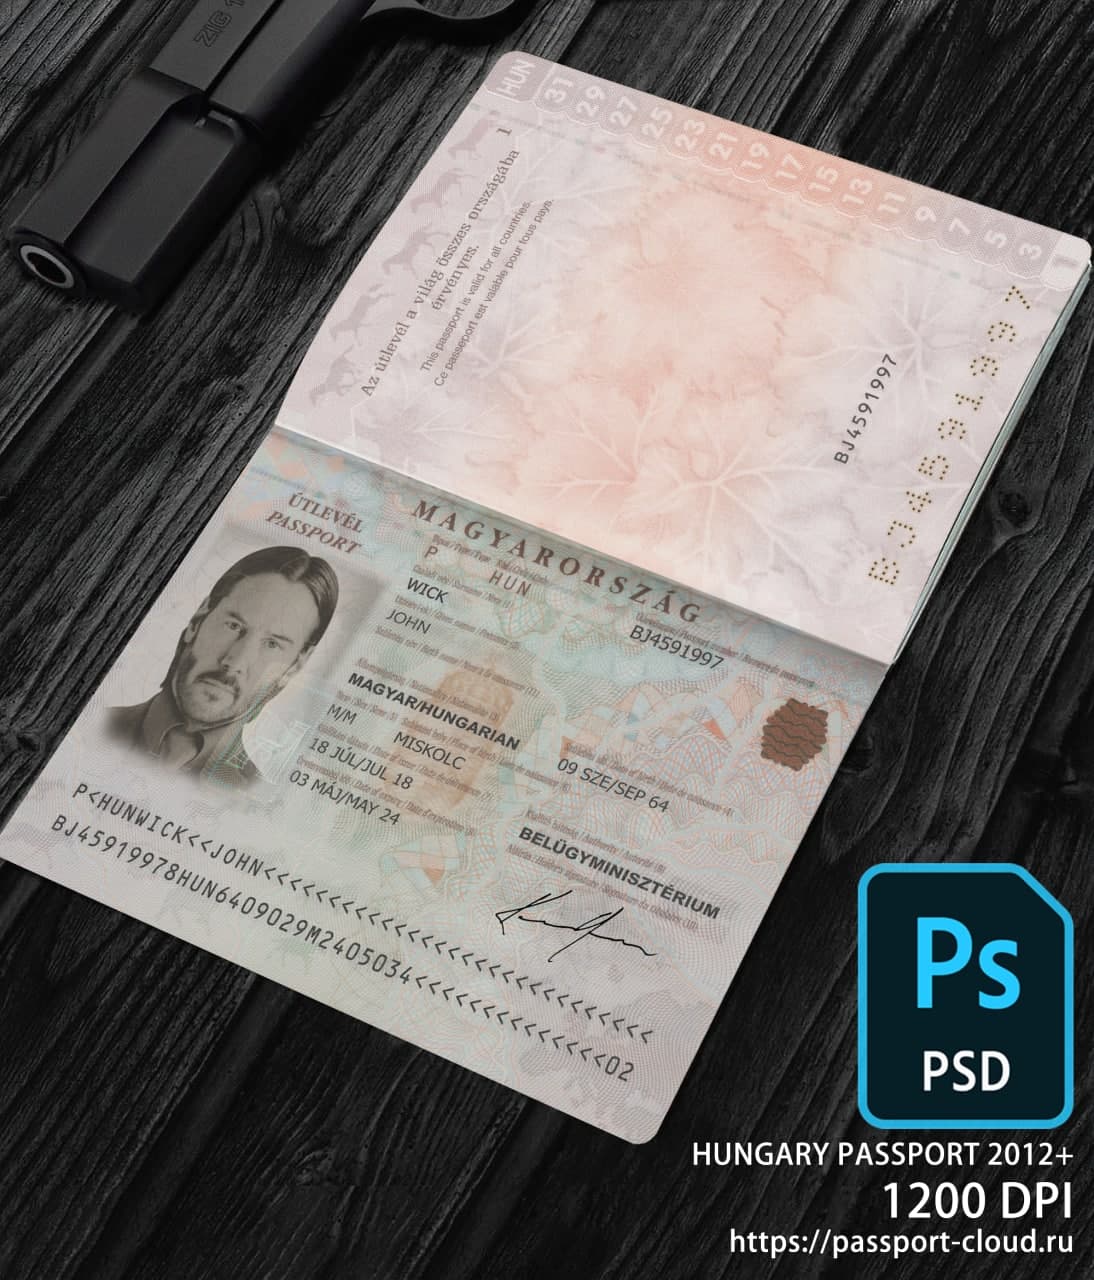 Hungary Passport 2012+ PSD1